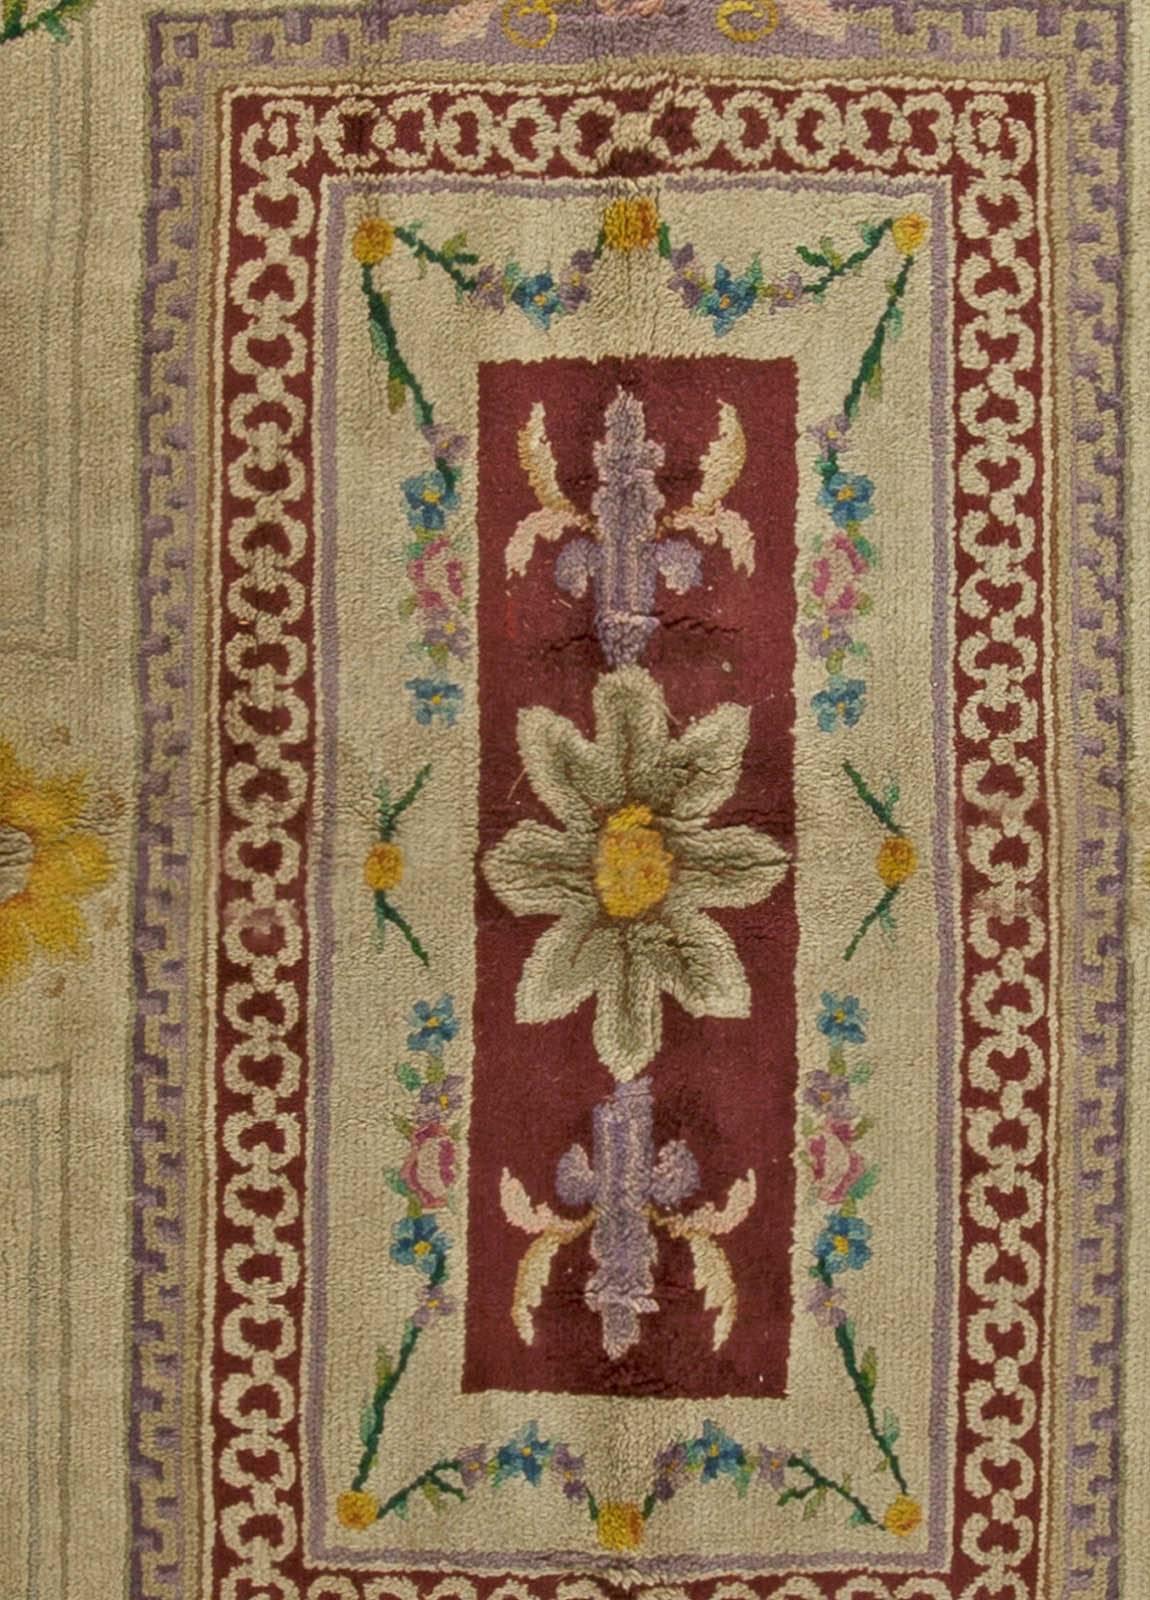 Vintage Spanish Savonnerie botanic handmade wool rug (size adjusted).
Size: 13'5